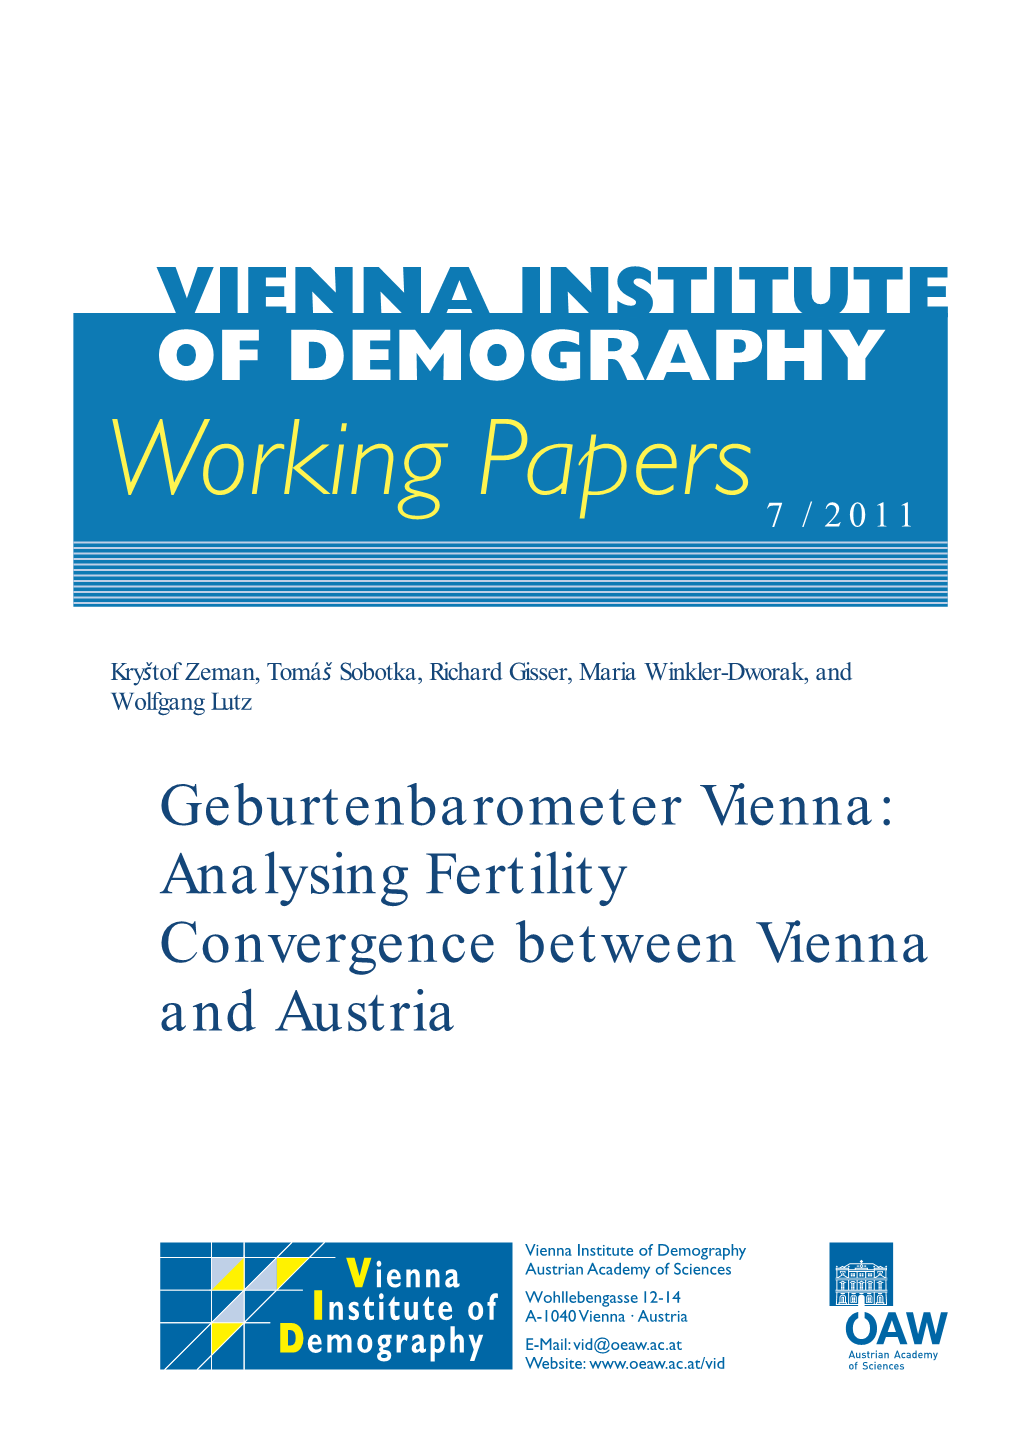 Analysing Fertility Convergence Between Vienna and Austria